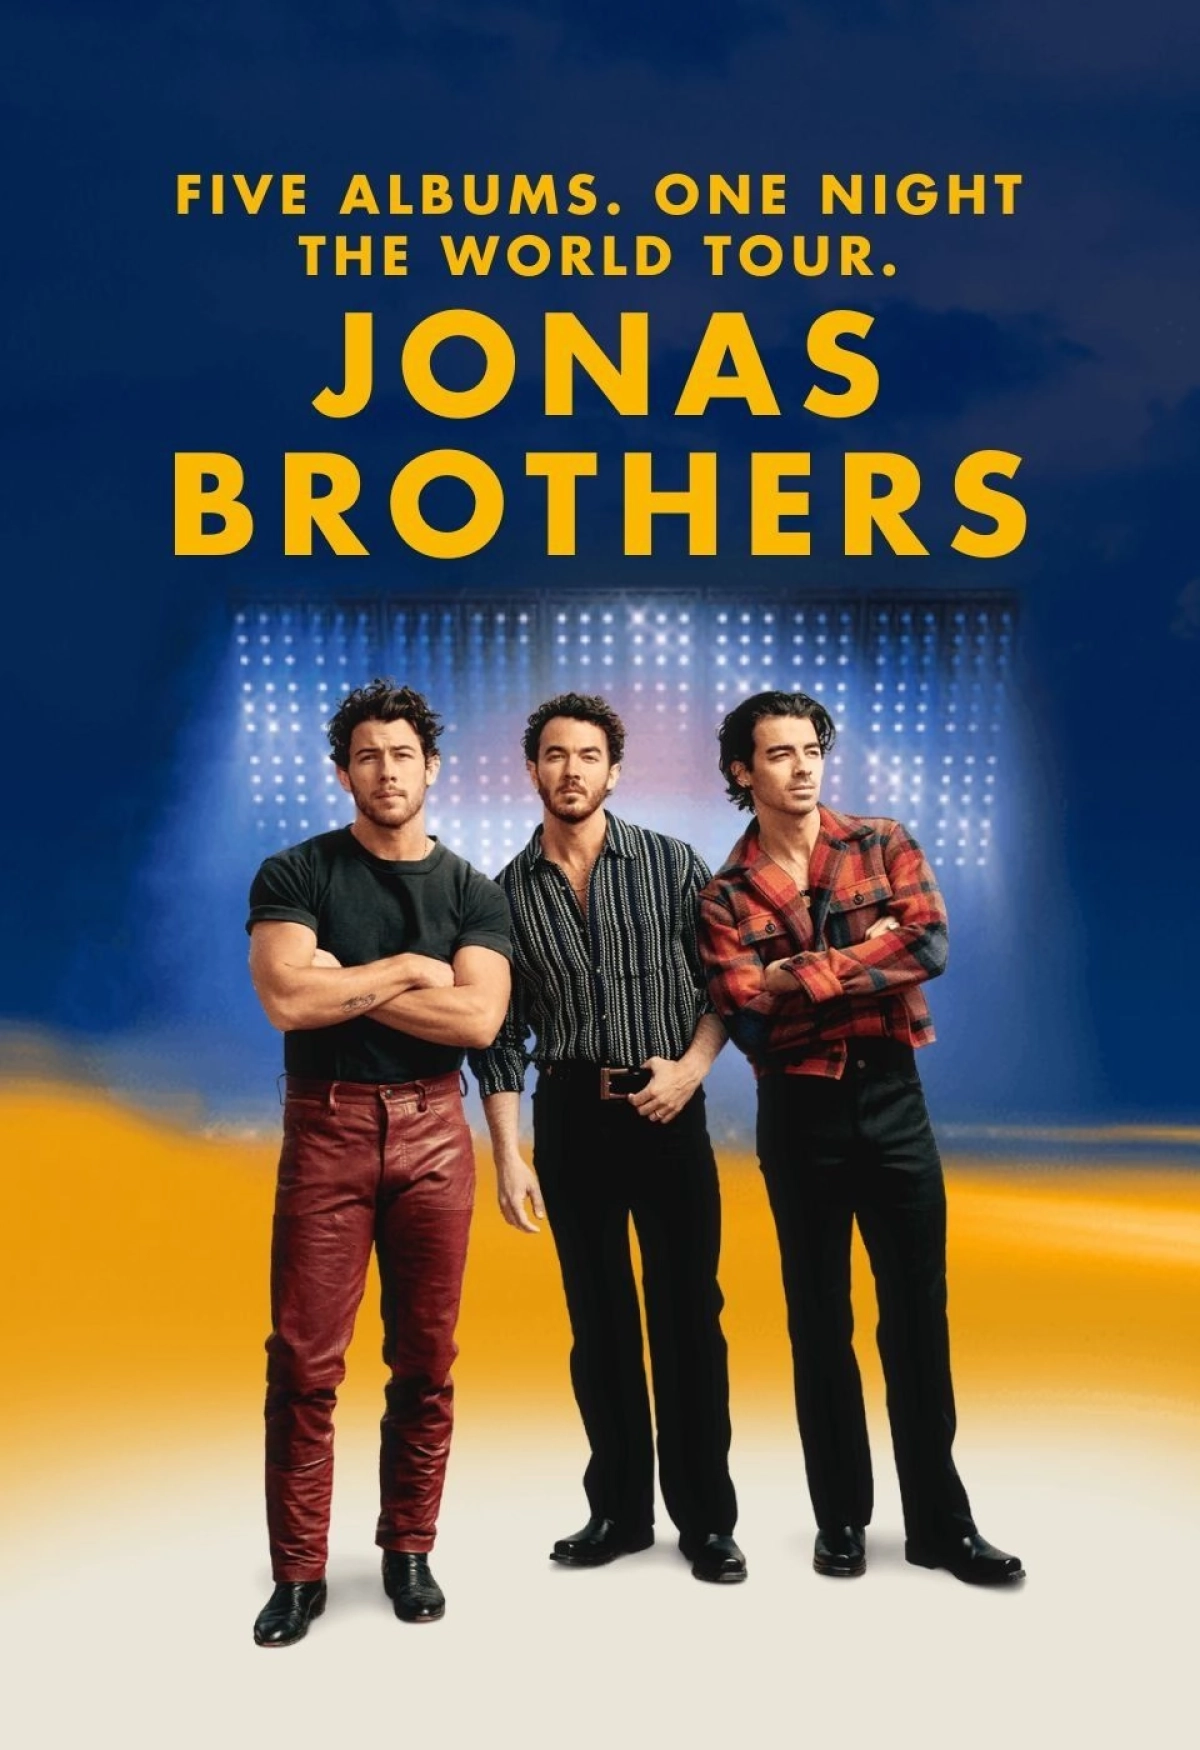 Jonas Brothers in der Wiener Stadthalle Tickets